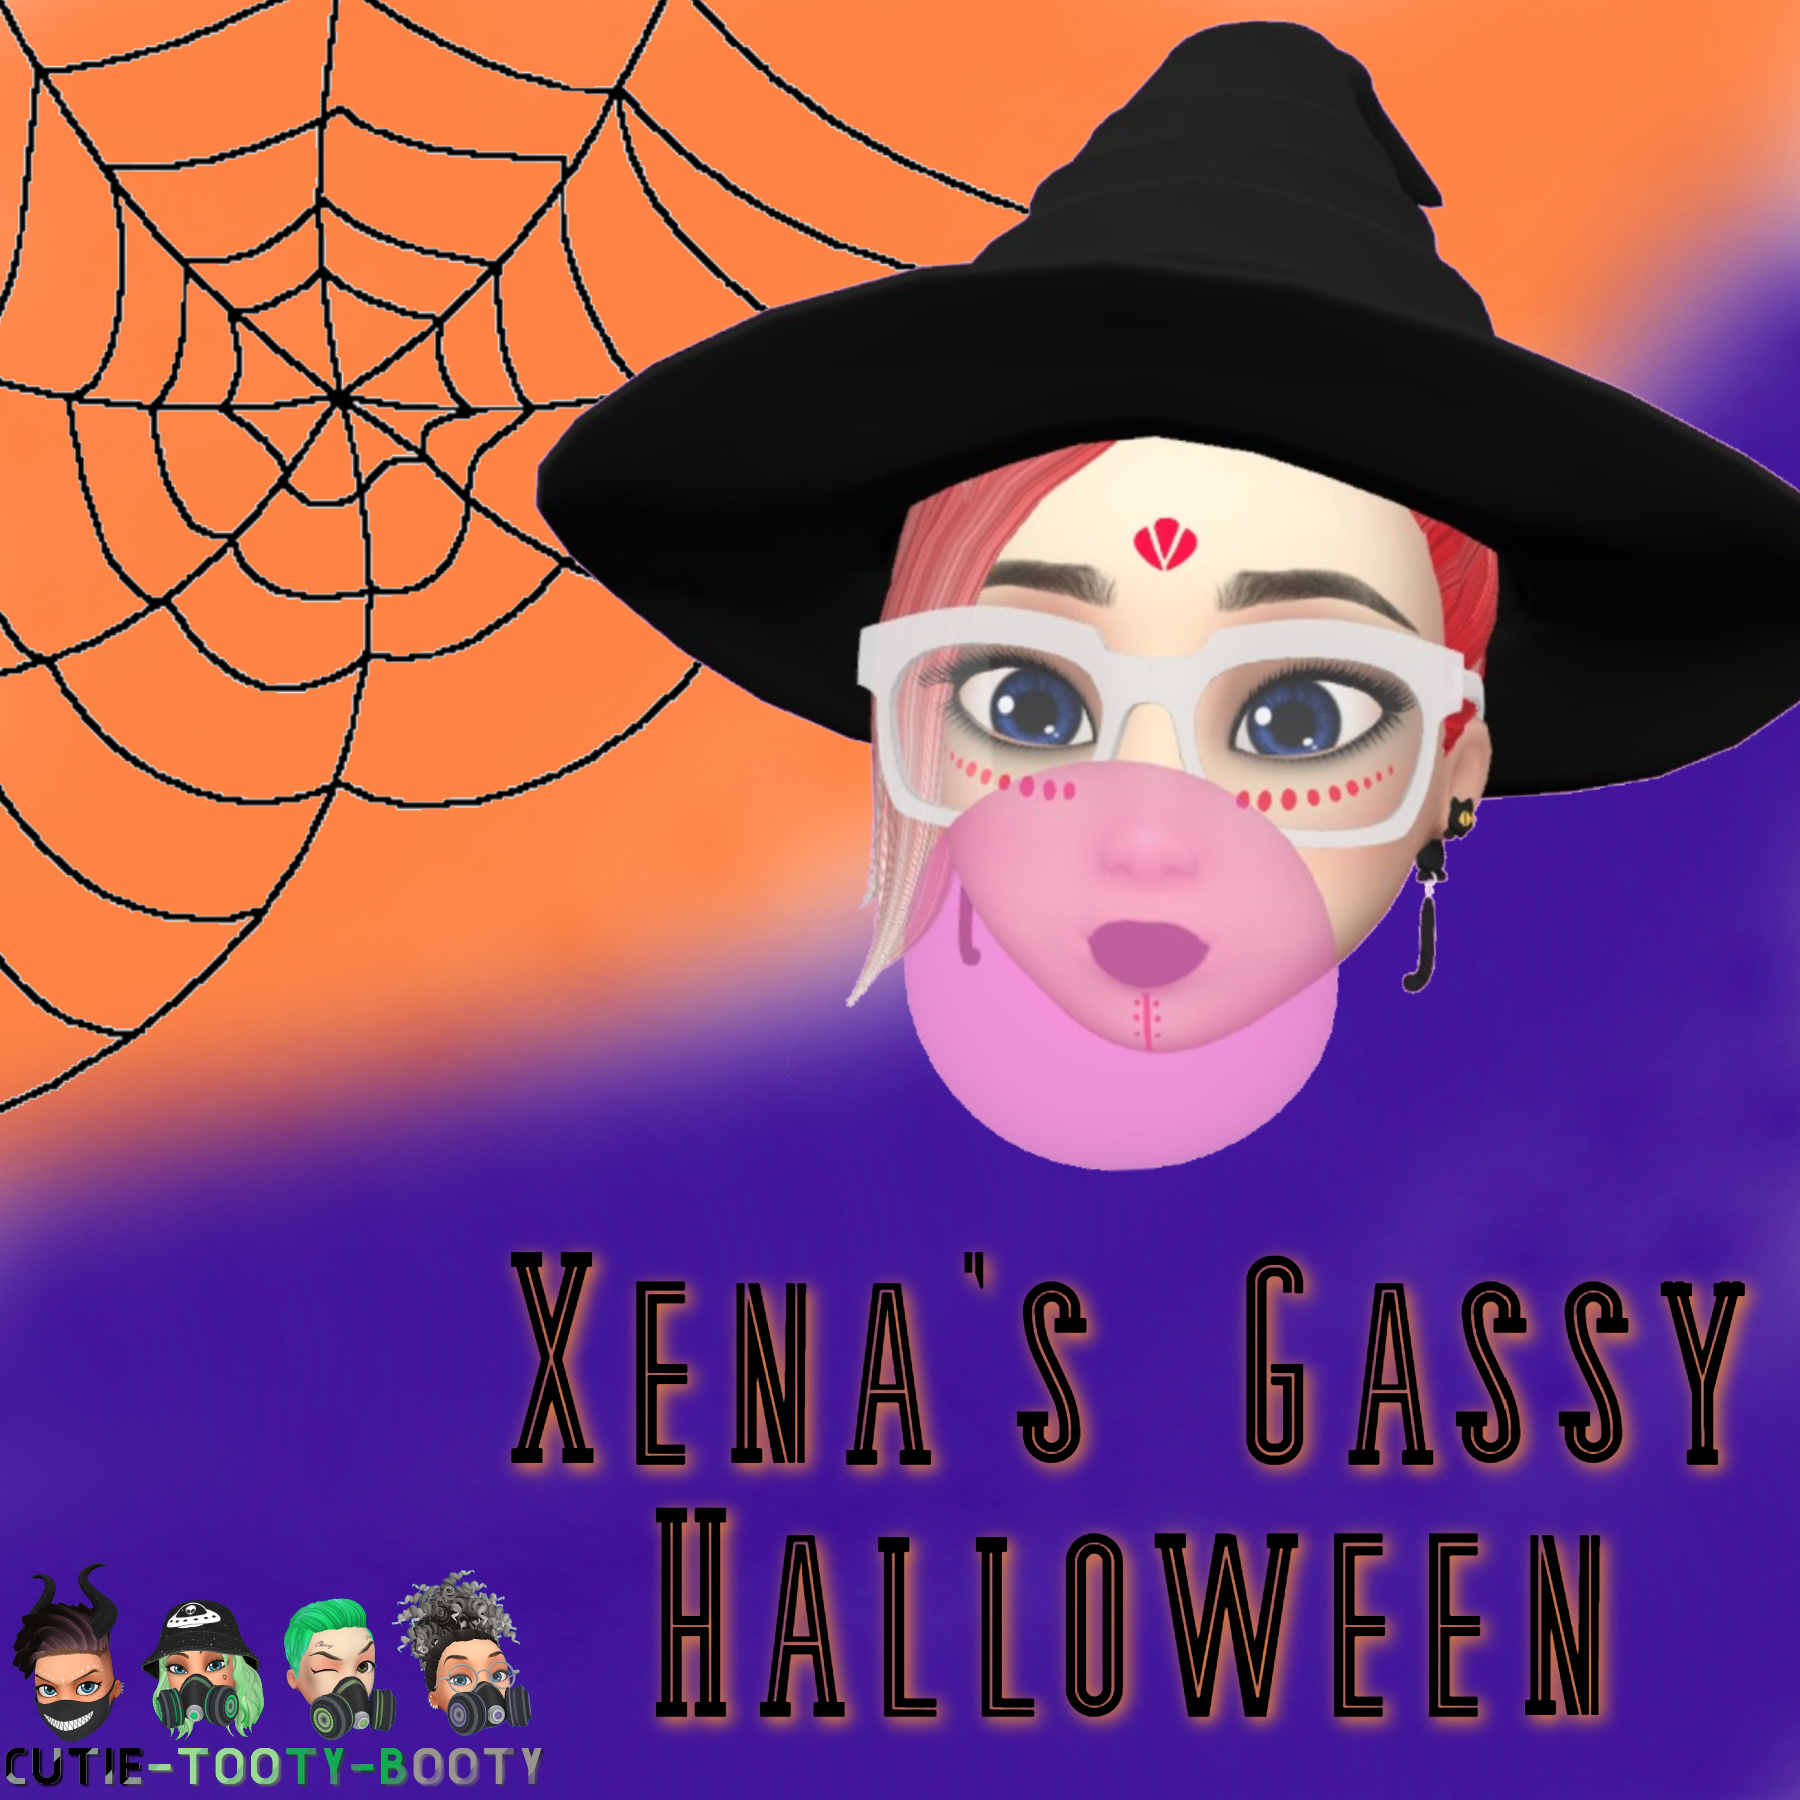 Xena's Gassy Halloween